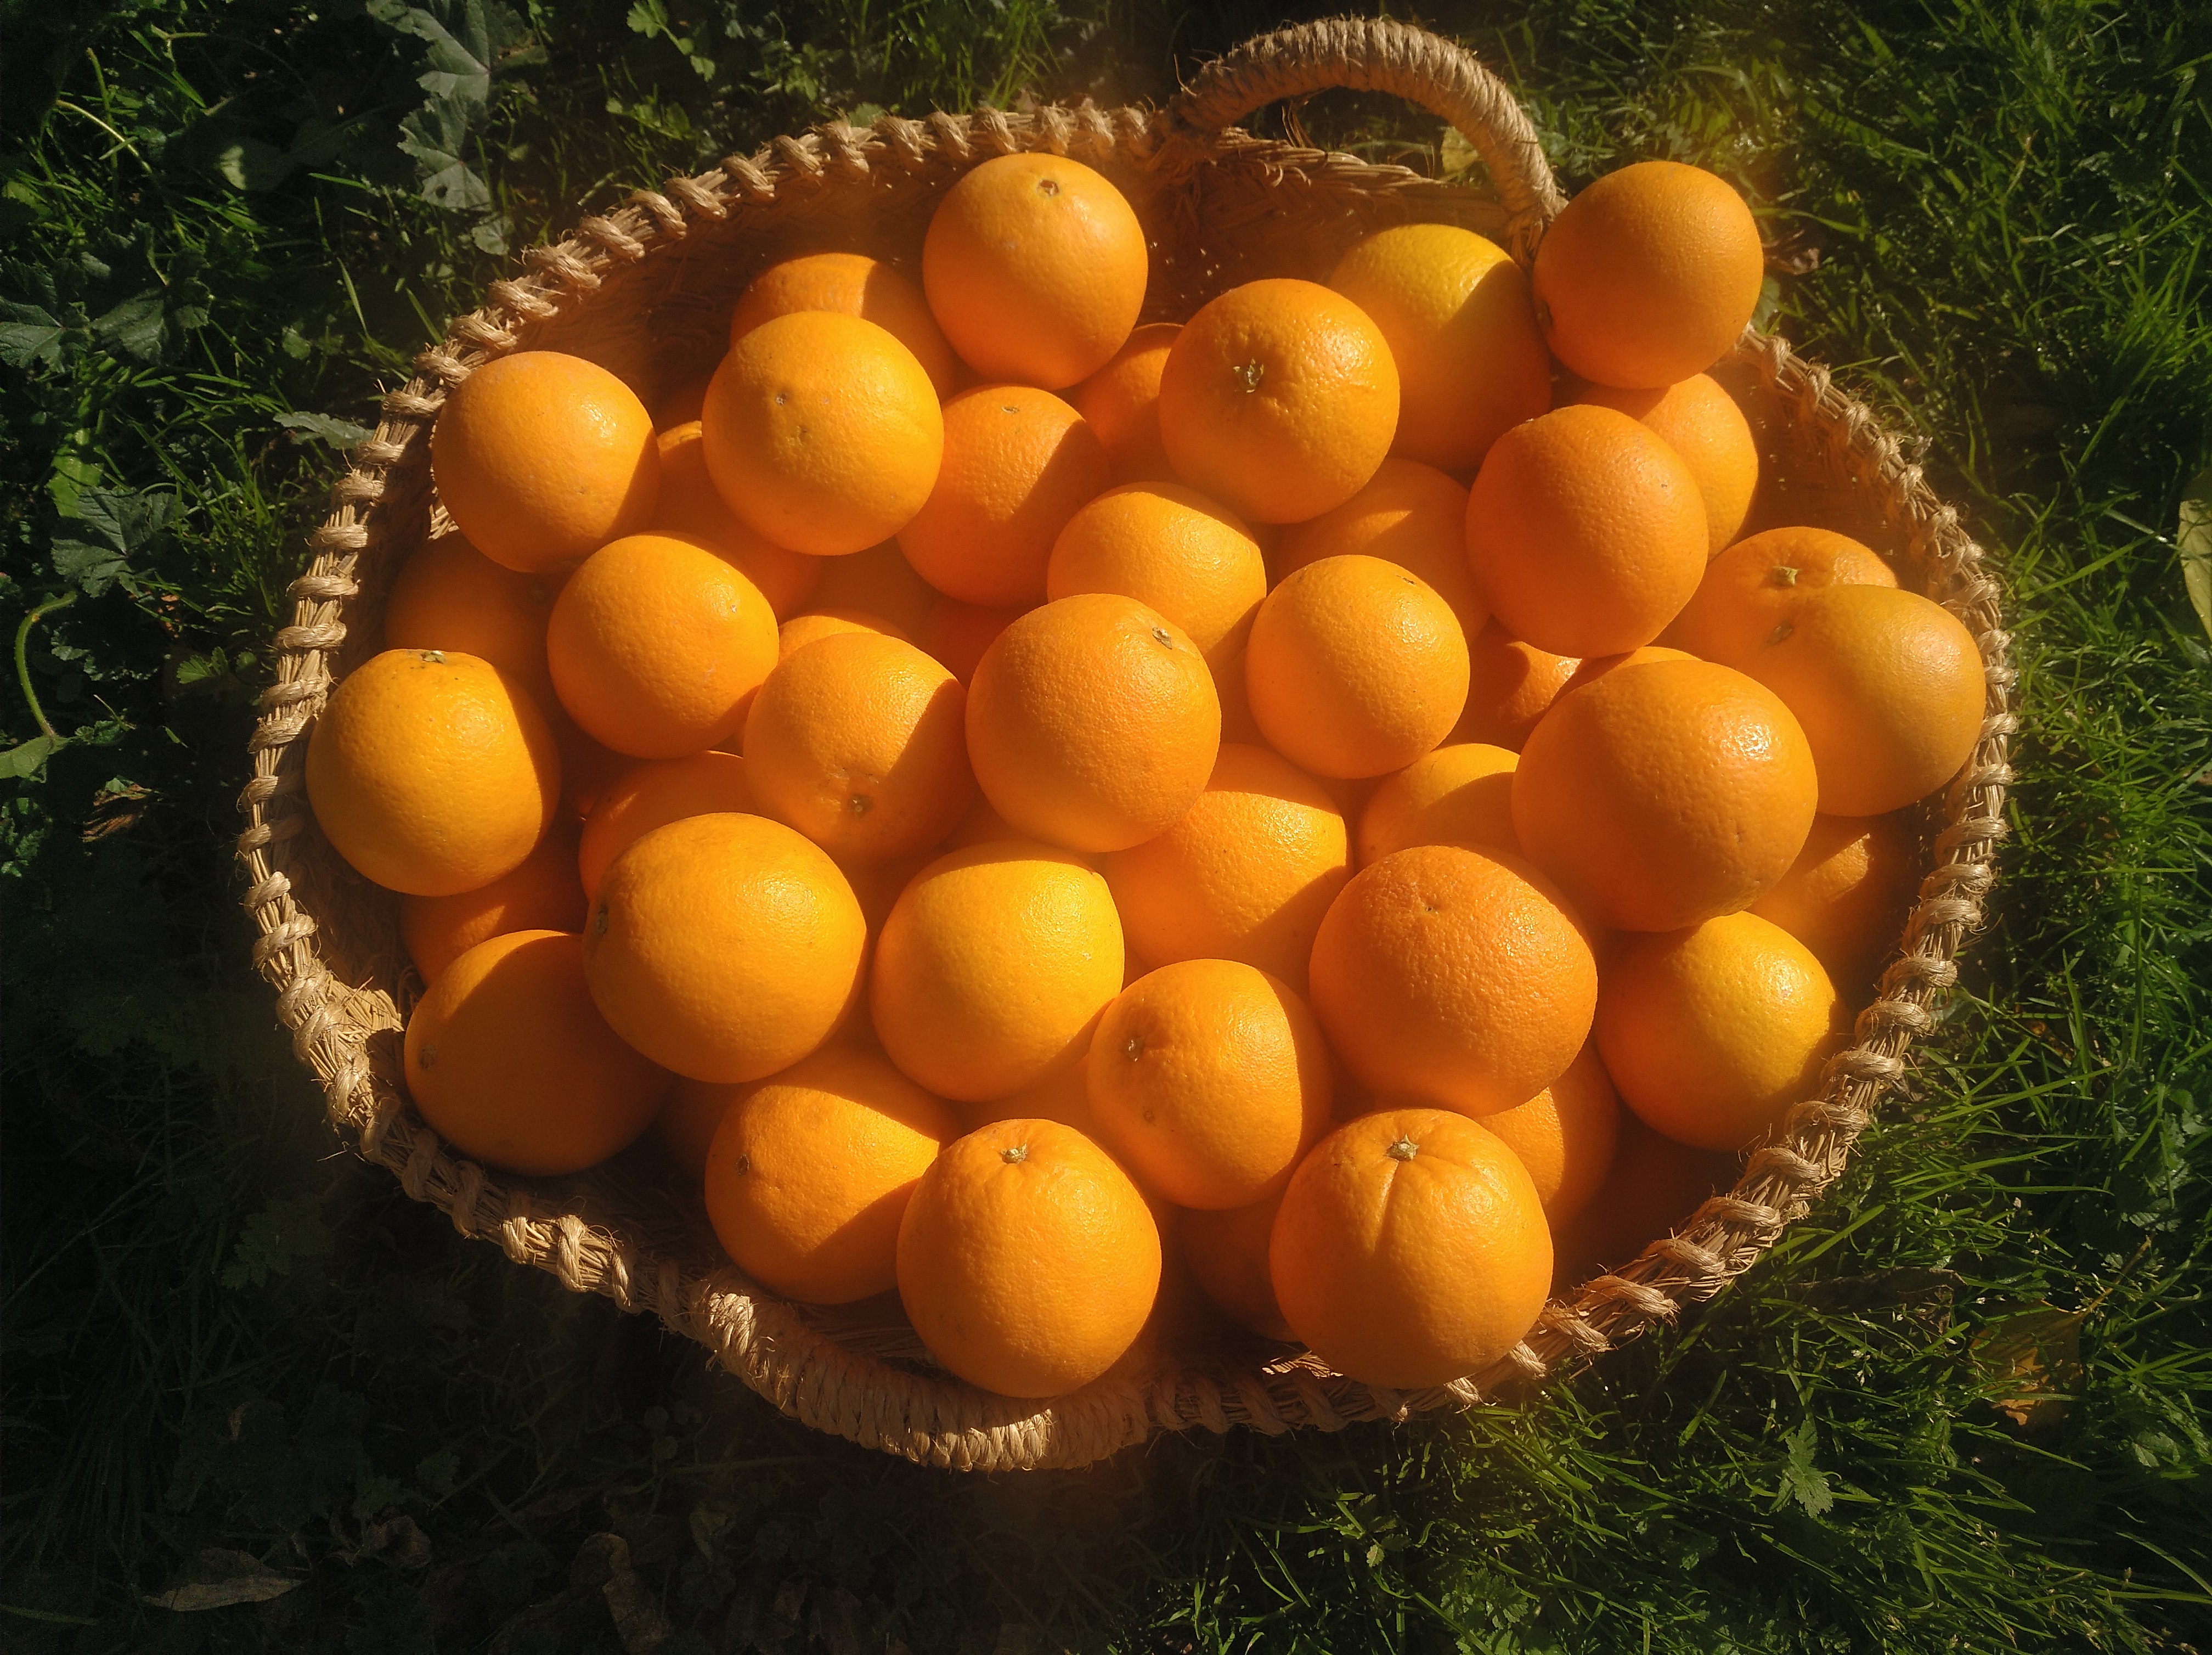 Naranjas navelinas valencianas de mesa (10 KG)